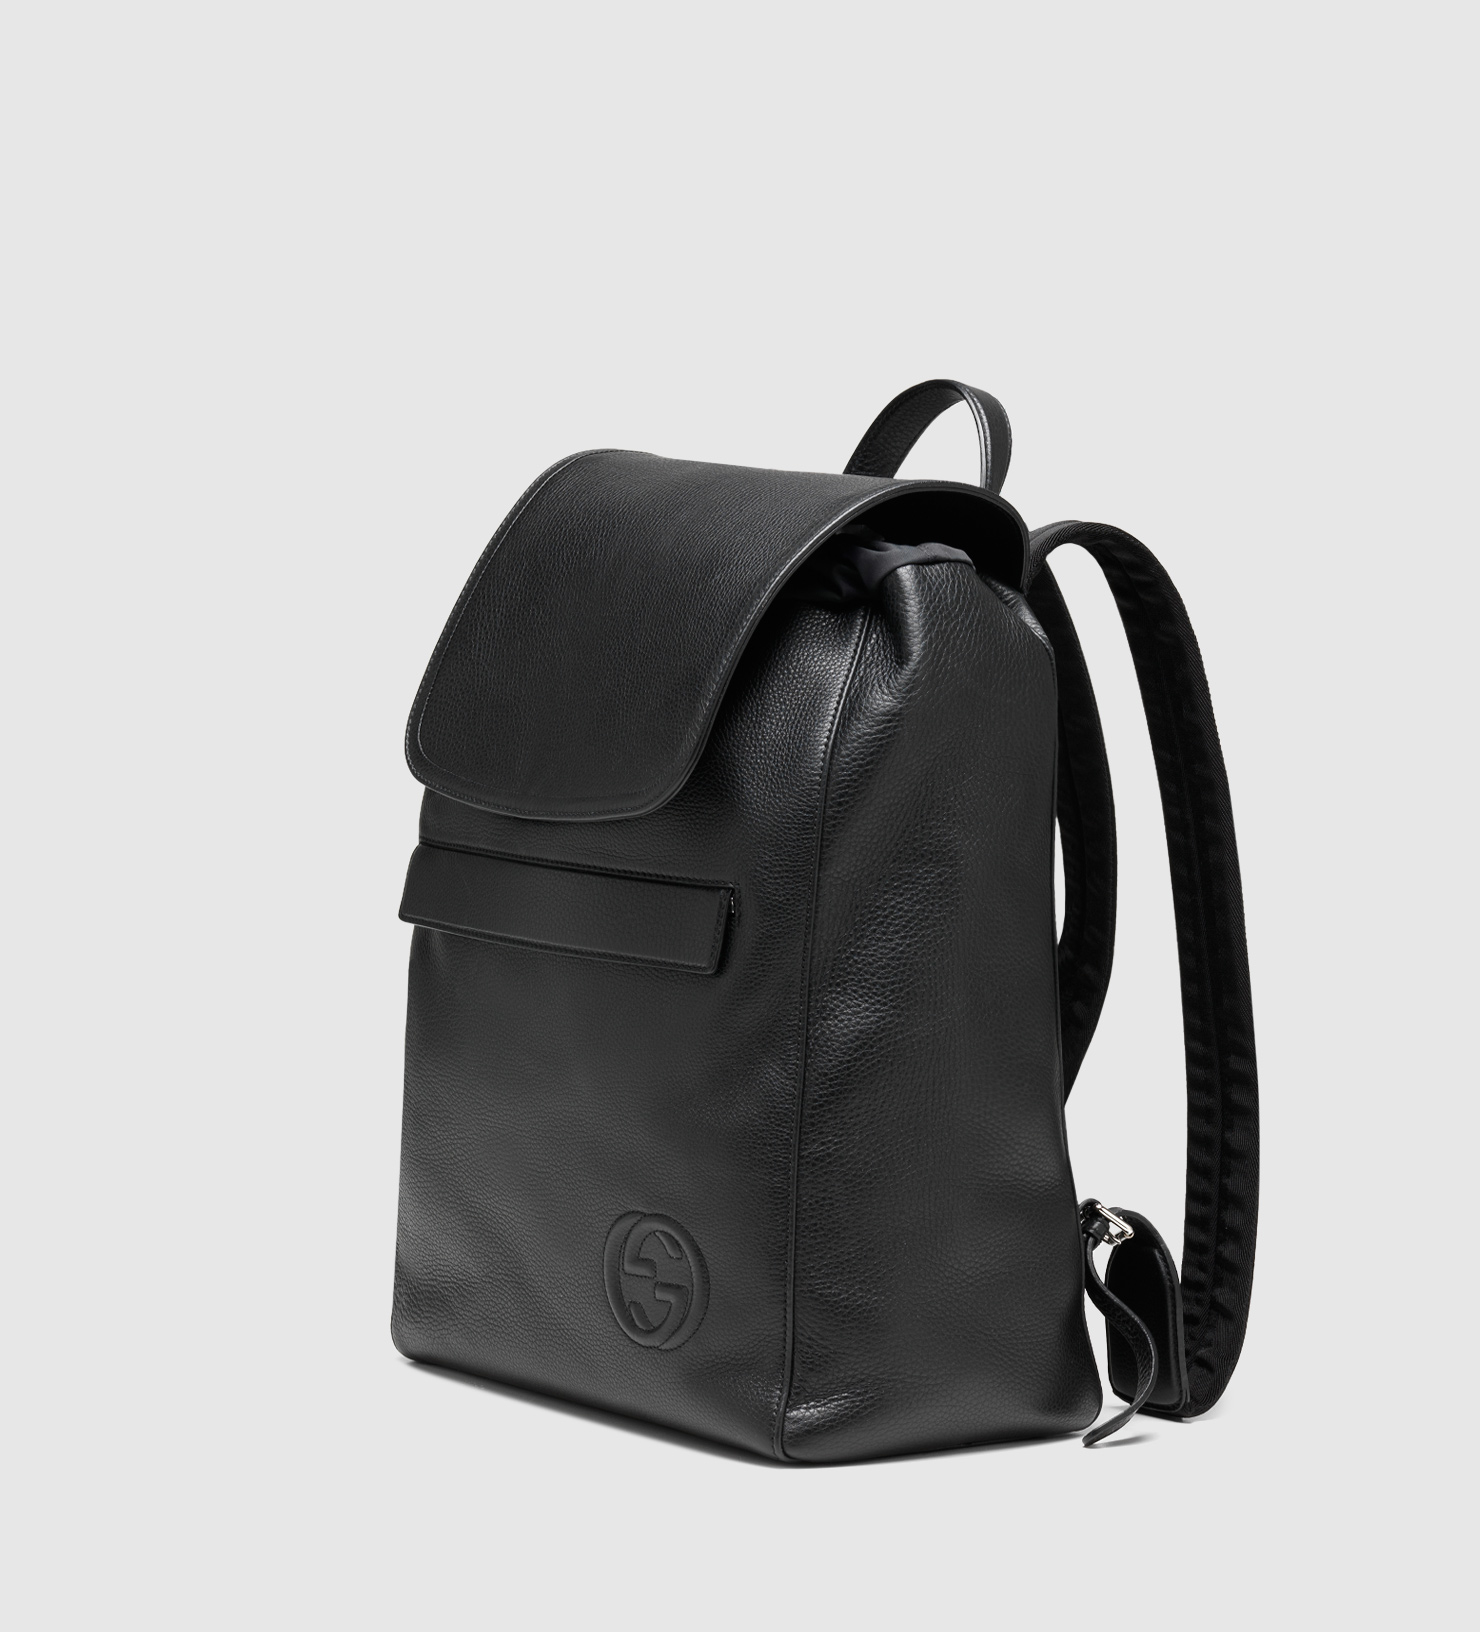 Lyst - Gucci Black Leather Backpack in Black for Men